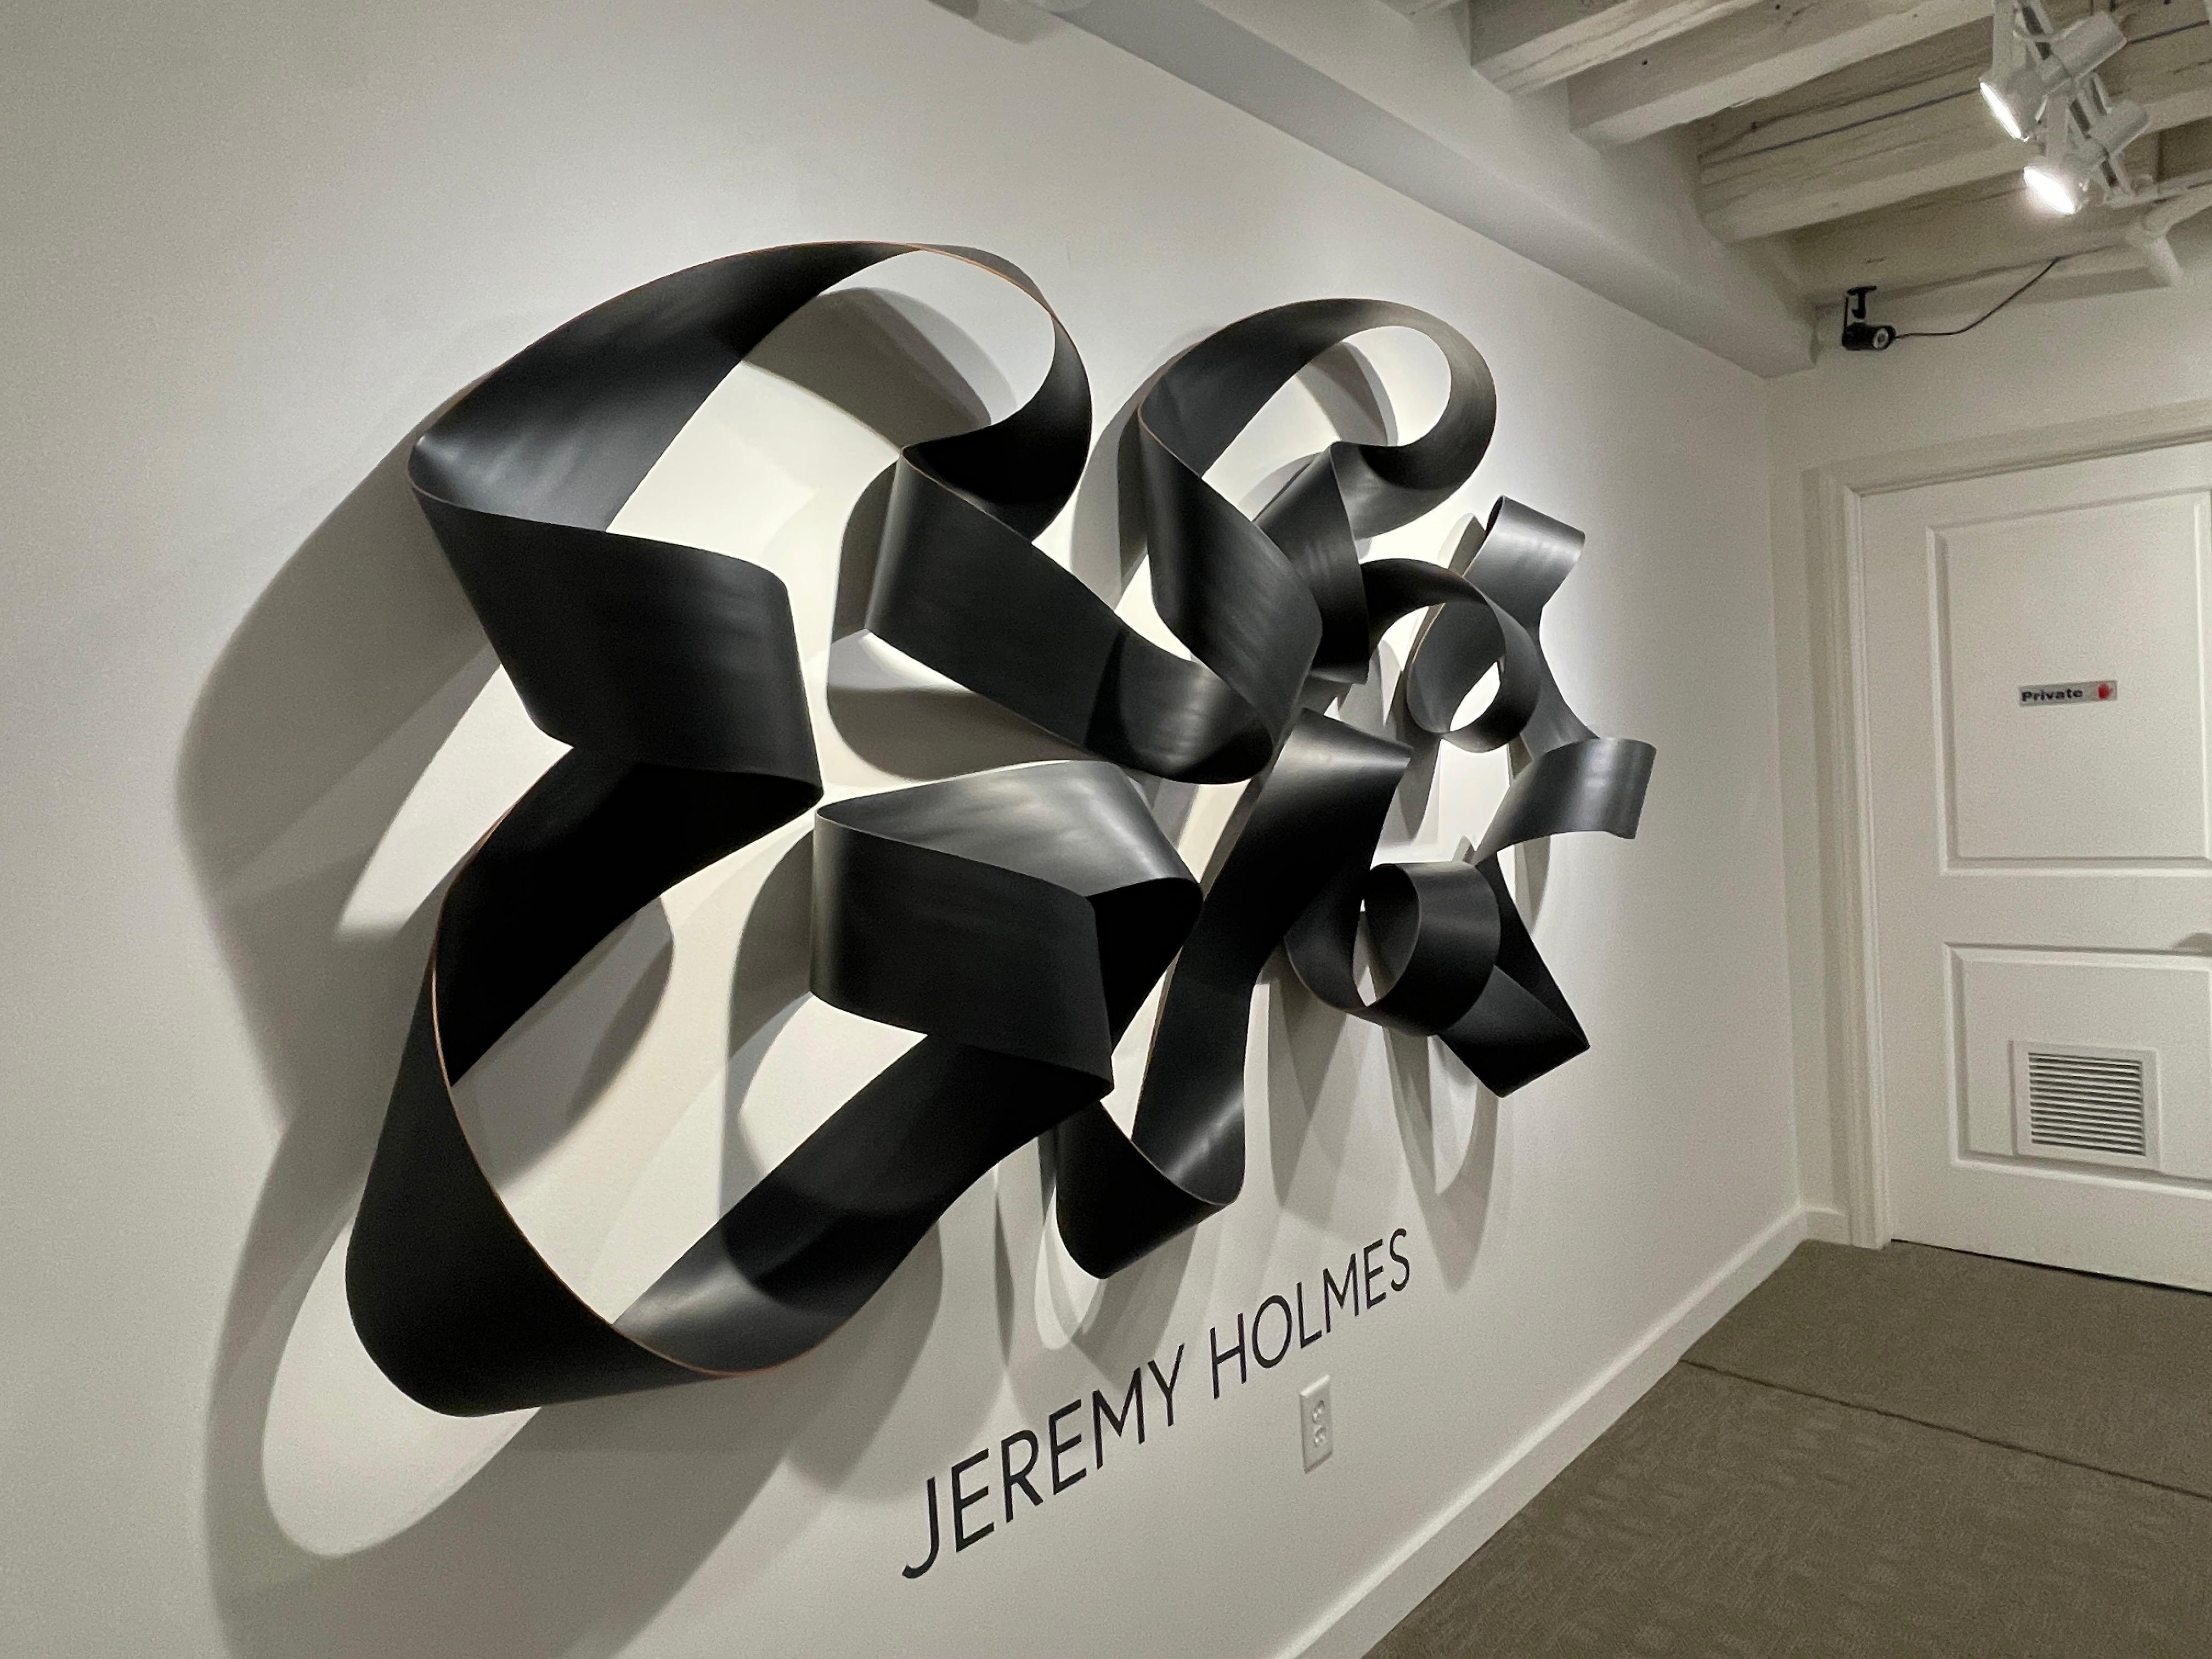 jeremy holmes sculpture